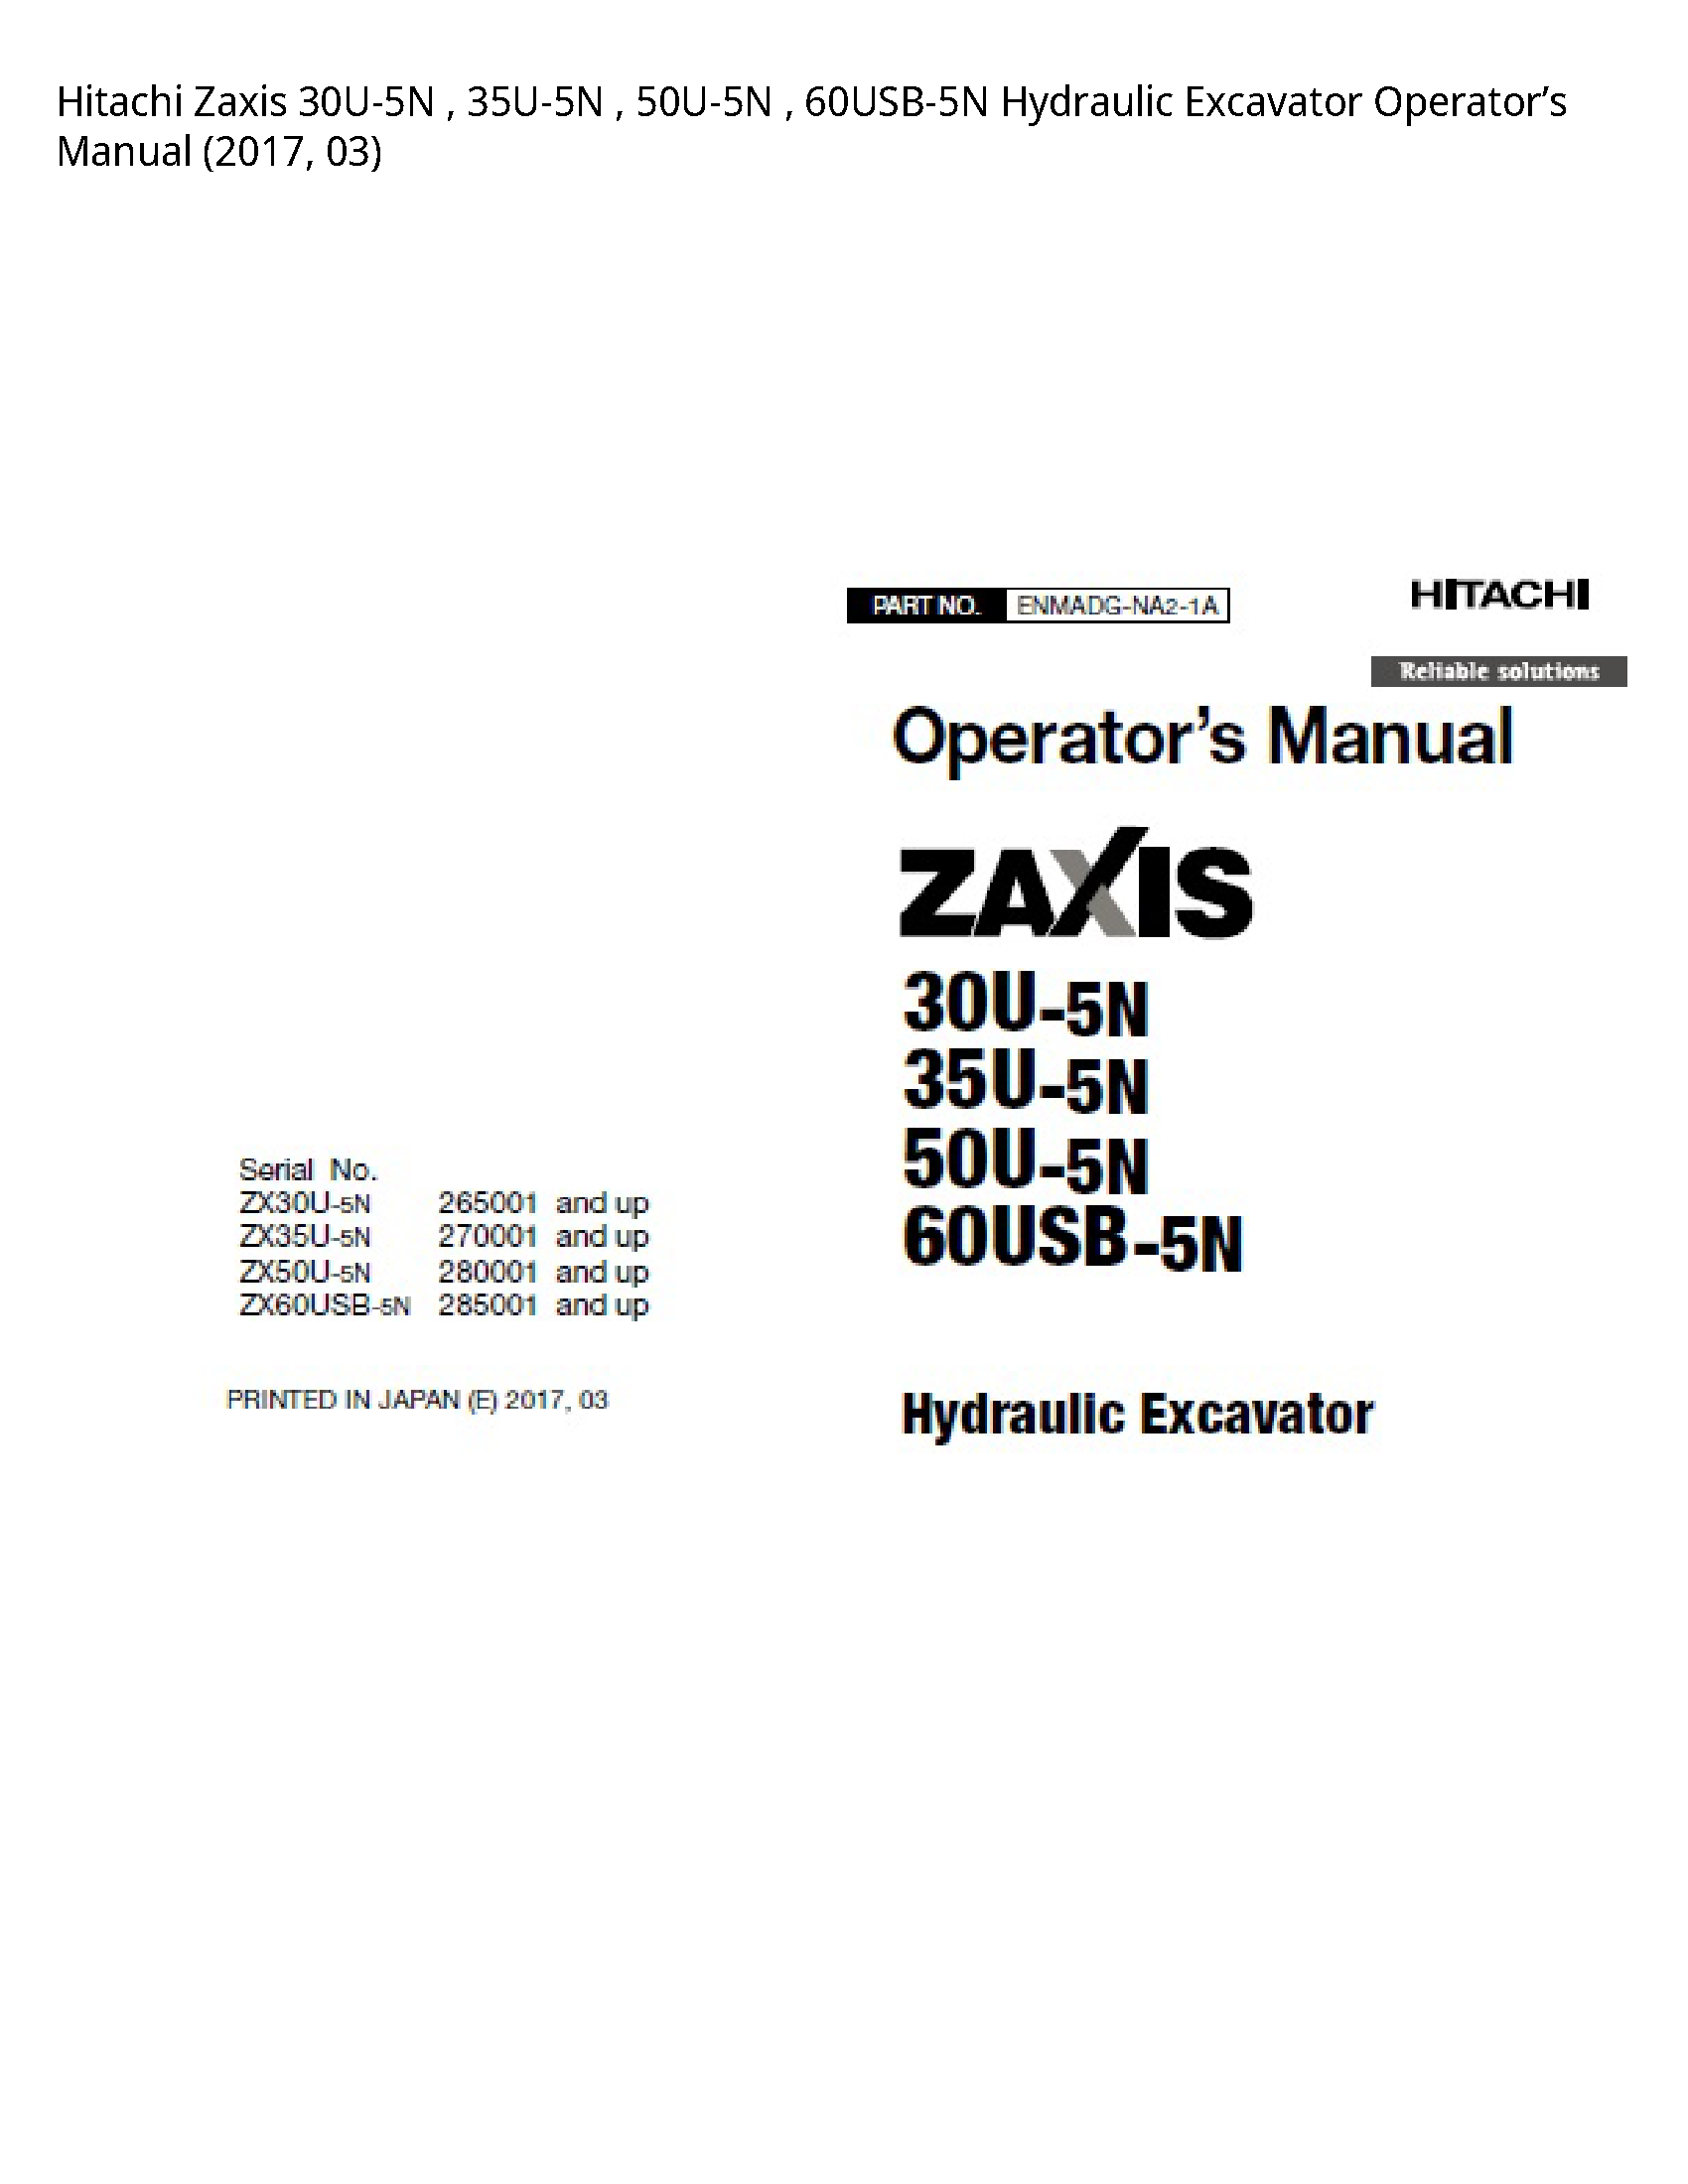 Hitachi 30U-5N Zaxis Hydraulic Excavator Operator’s manual